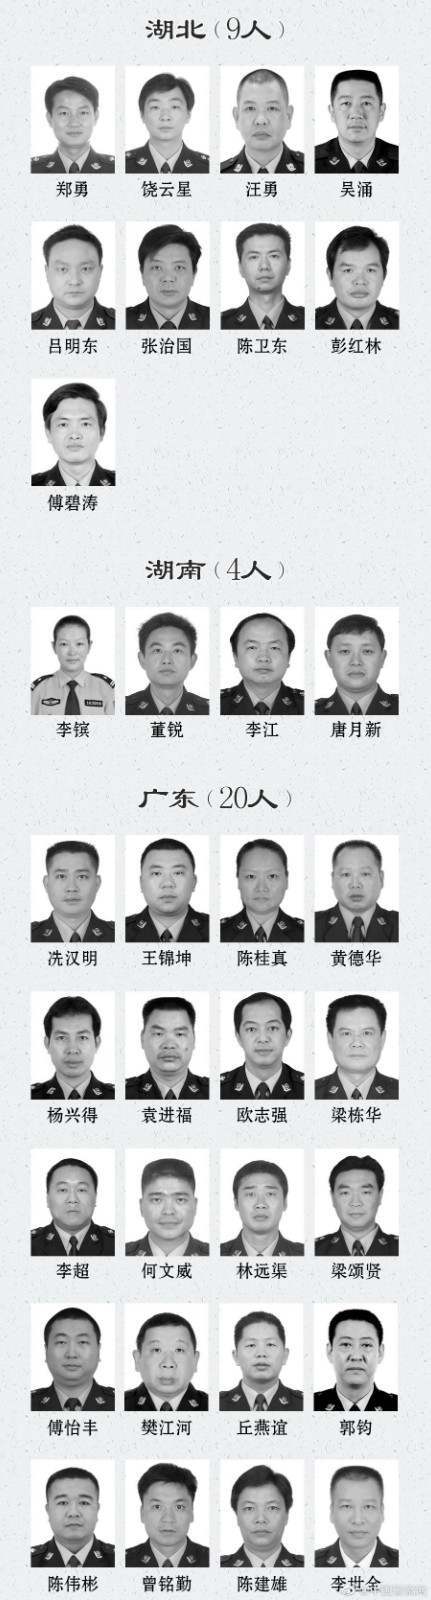 Recall! List of policeman of on business sacrifice was announced 2020, hunan 4 people